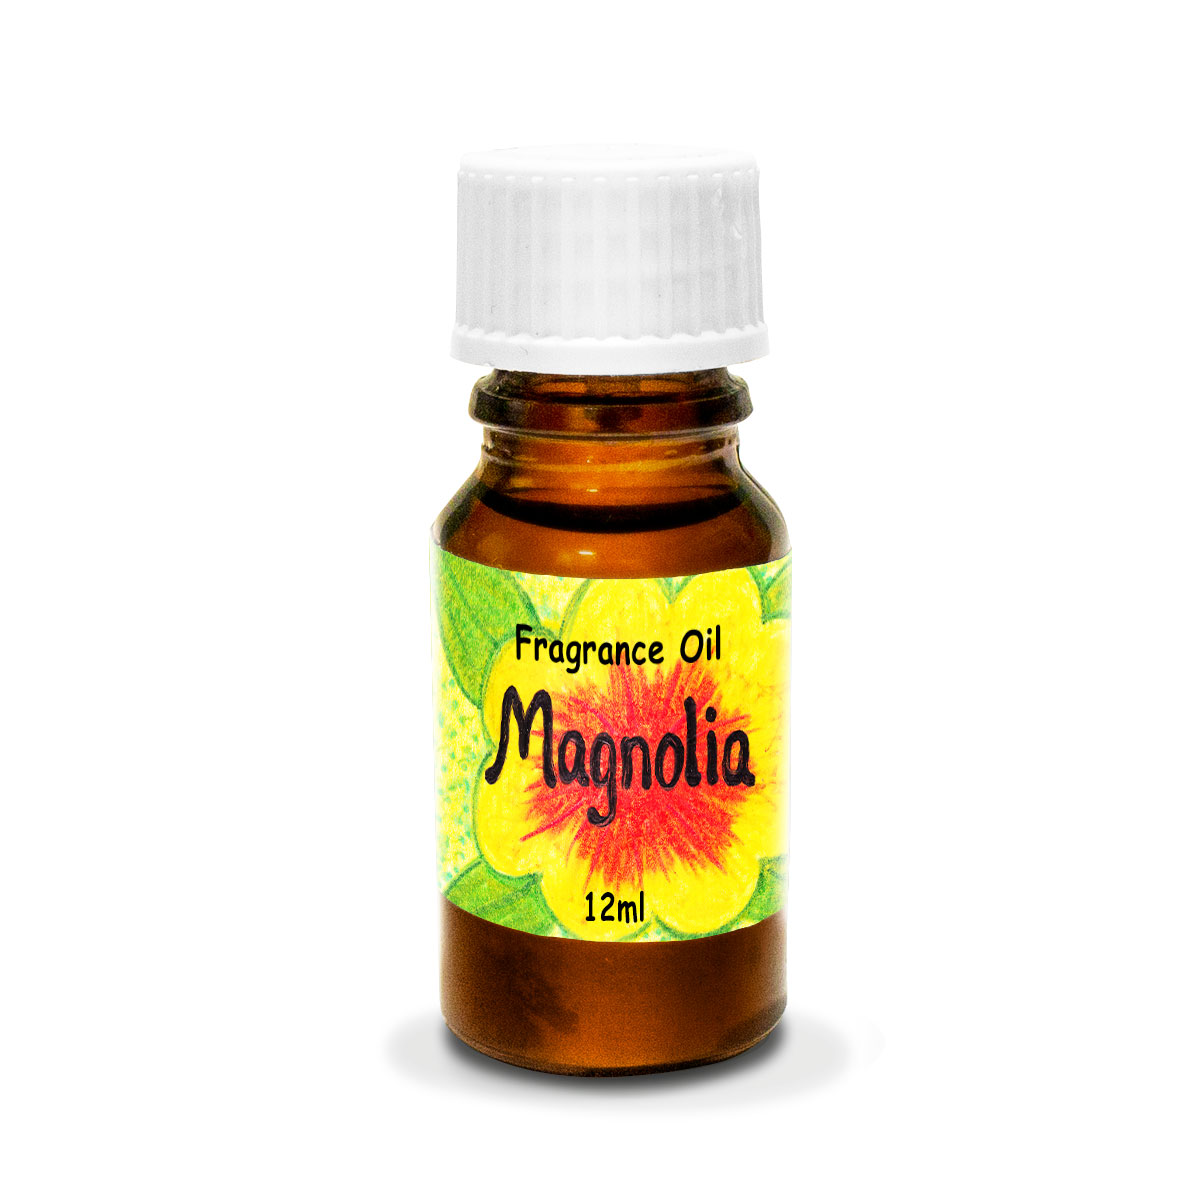 Magnolia - Fragrance Oil